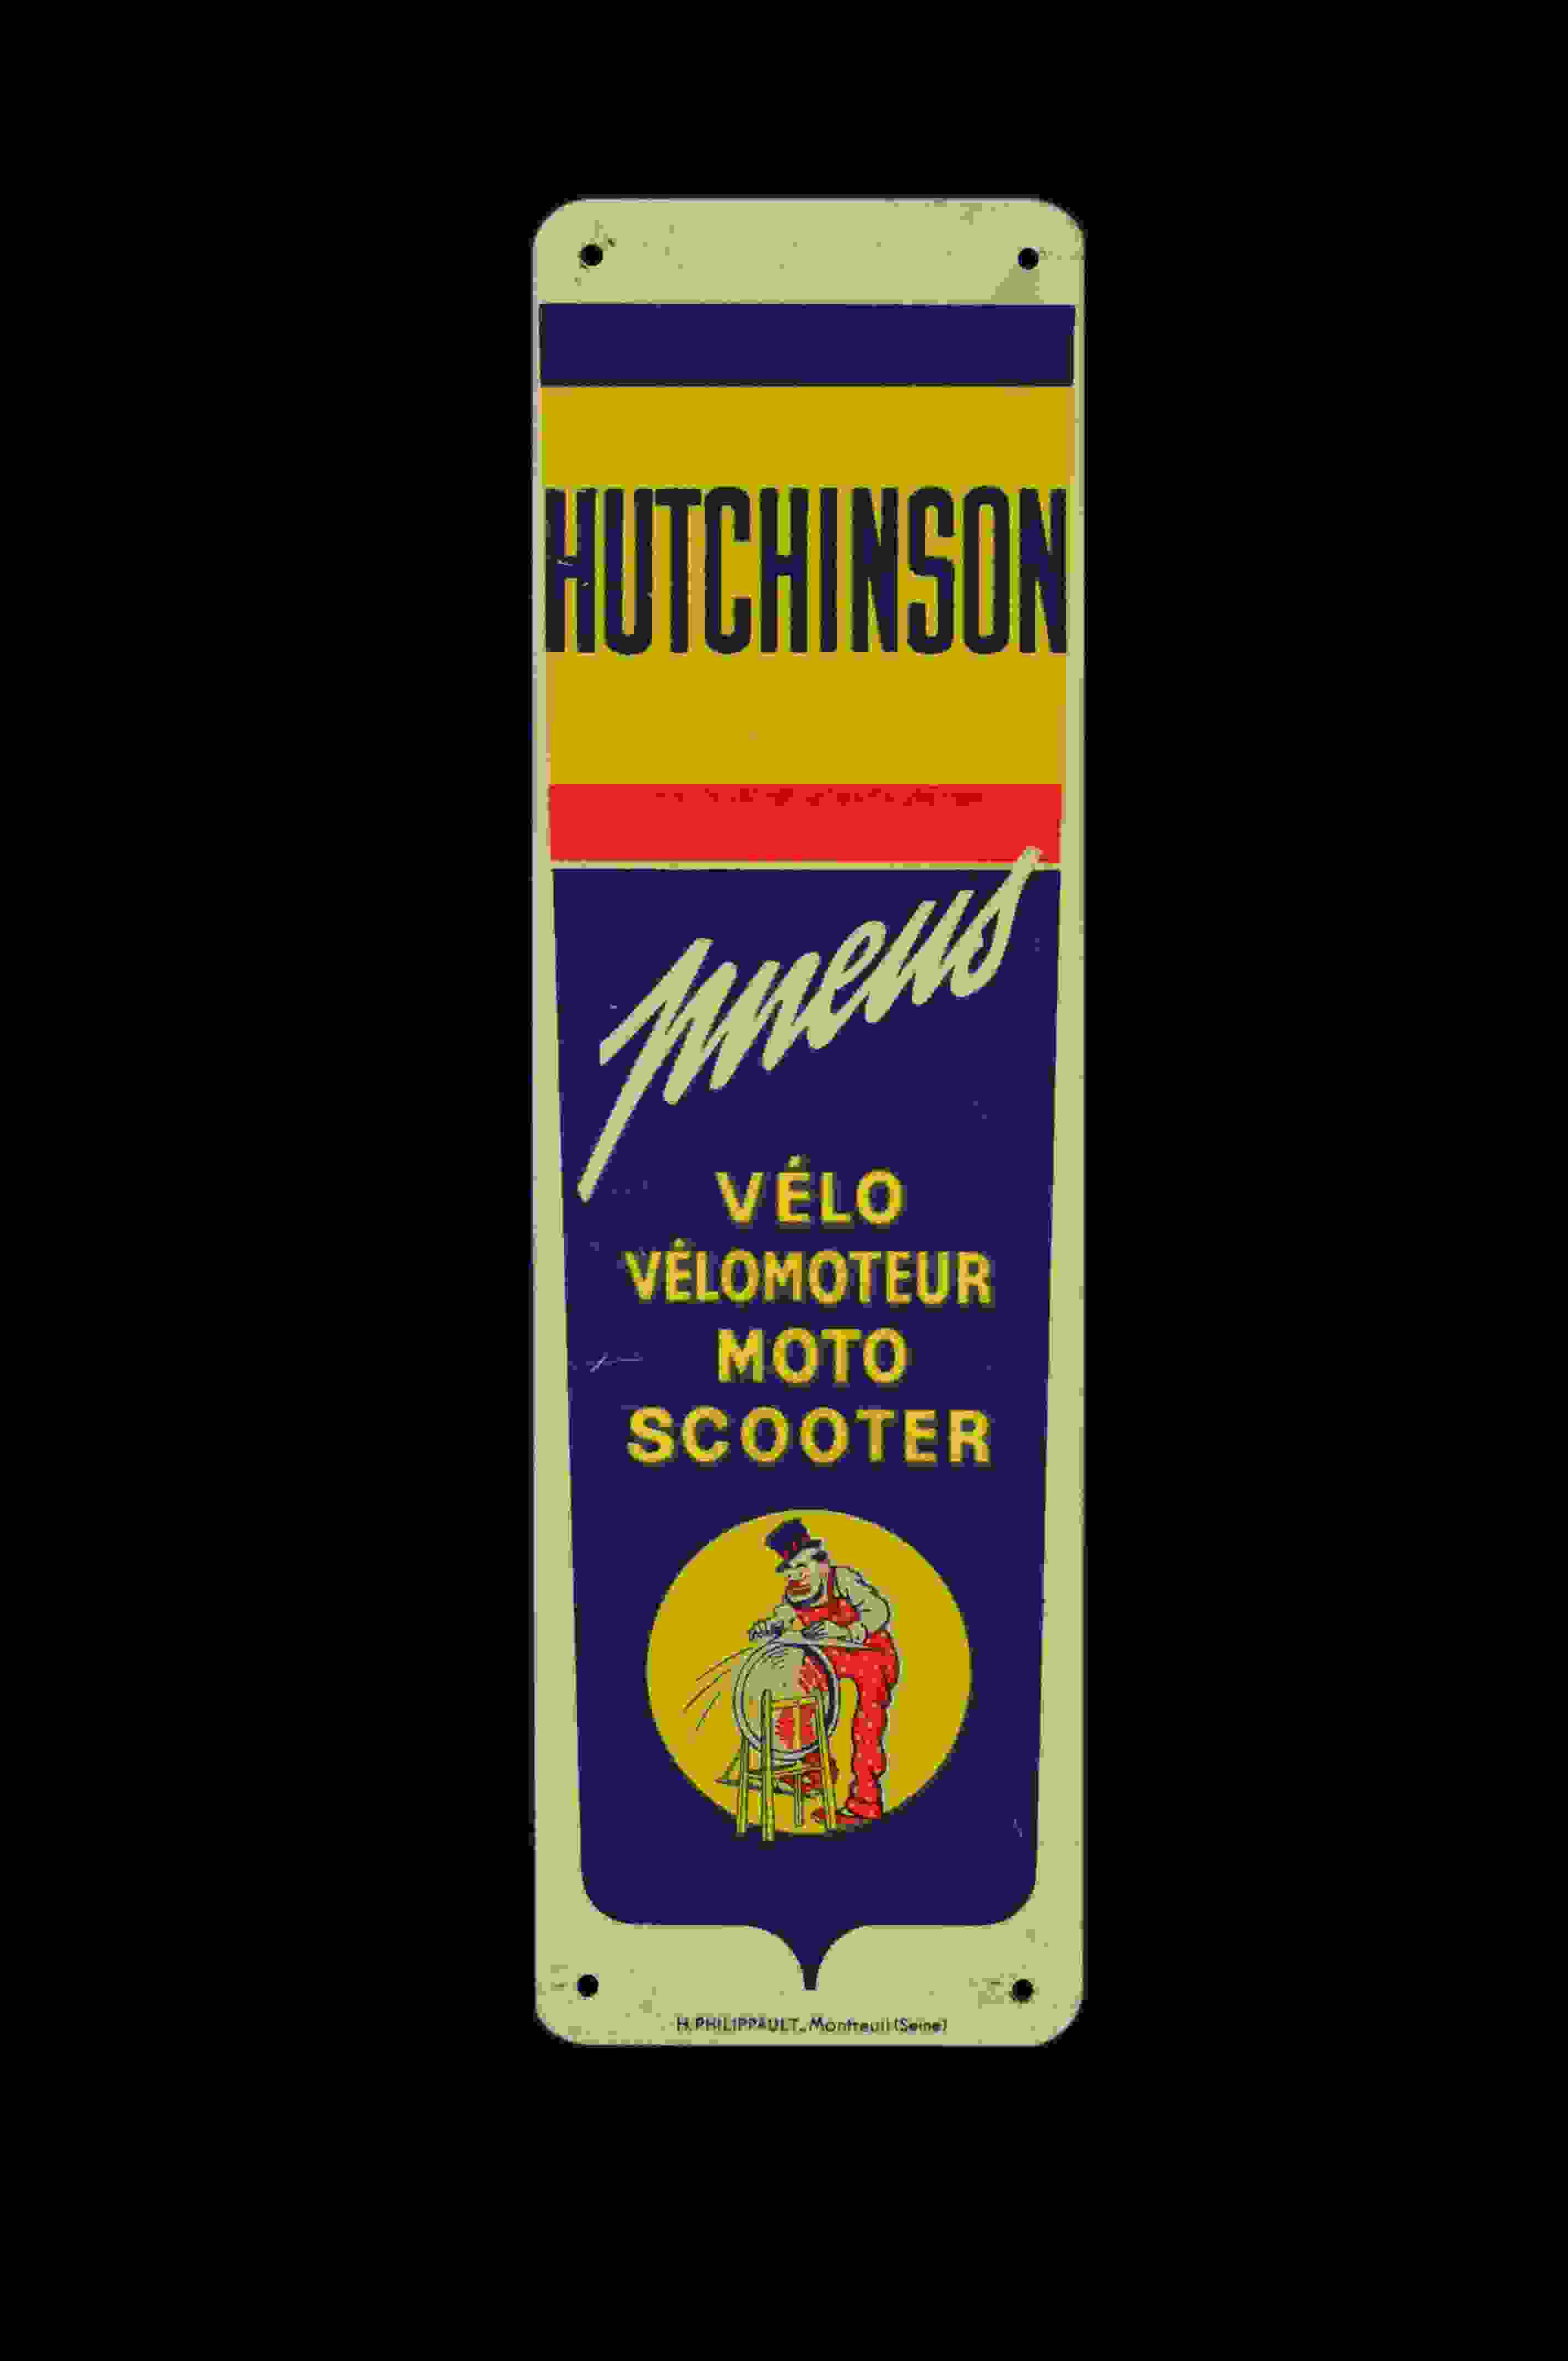 Hutchinson pneus 